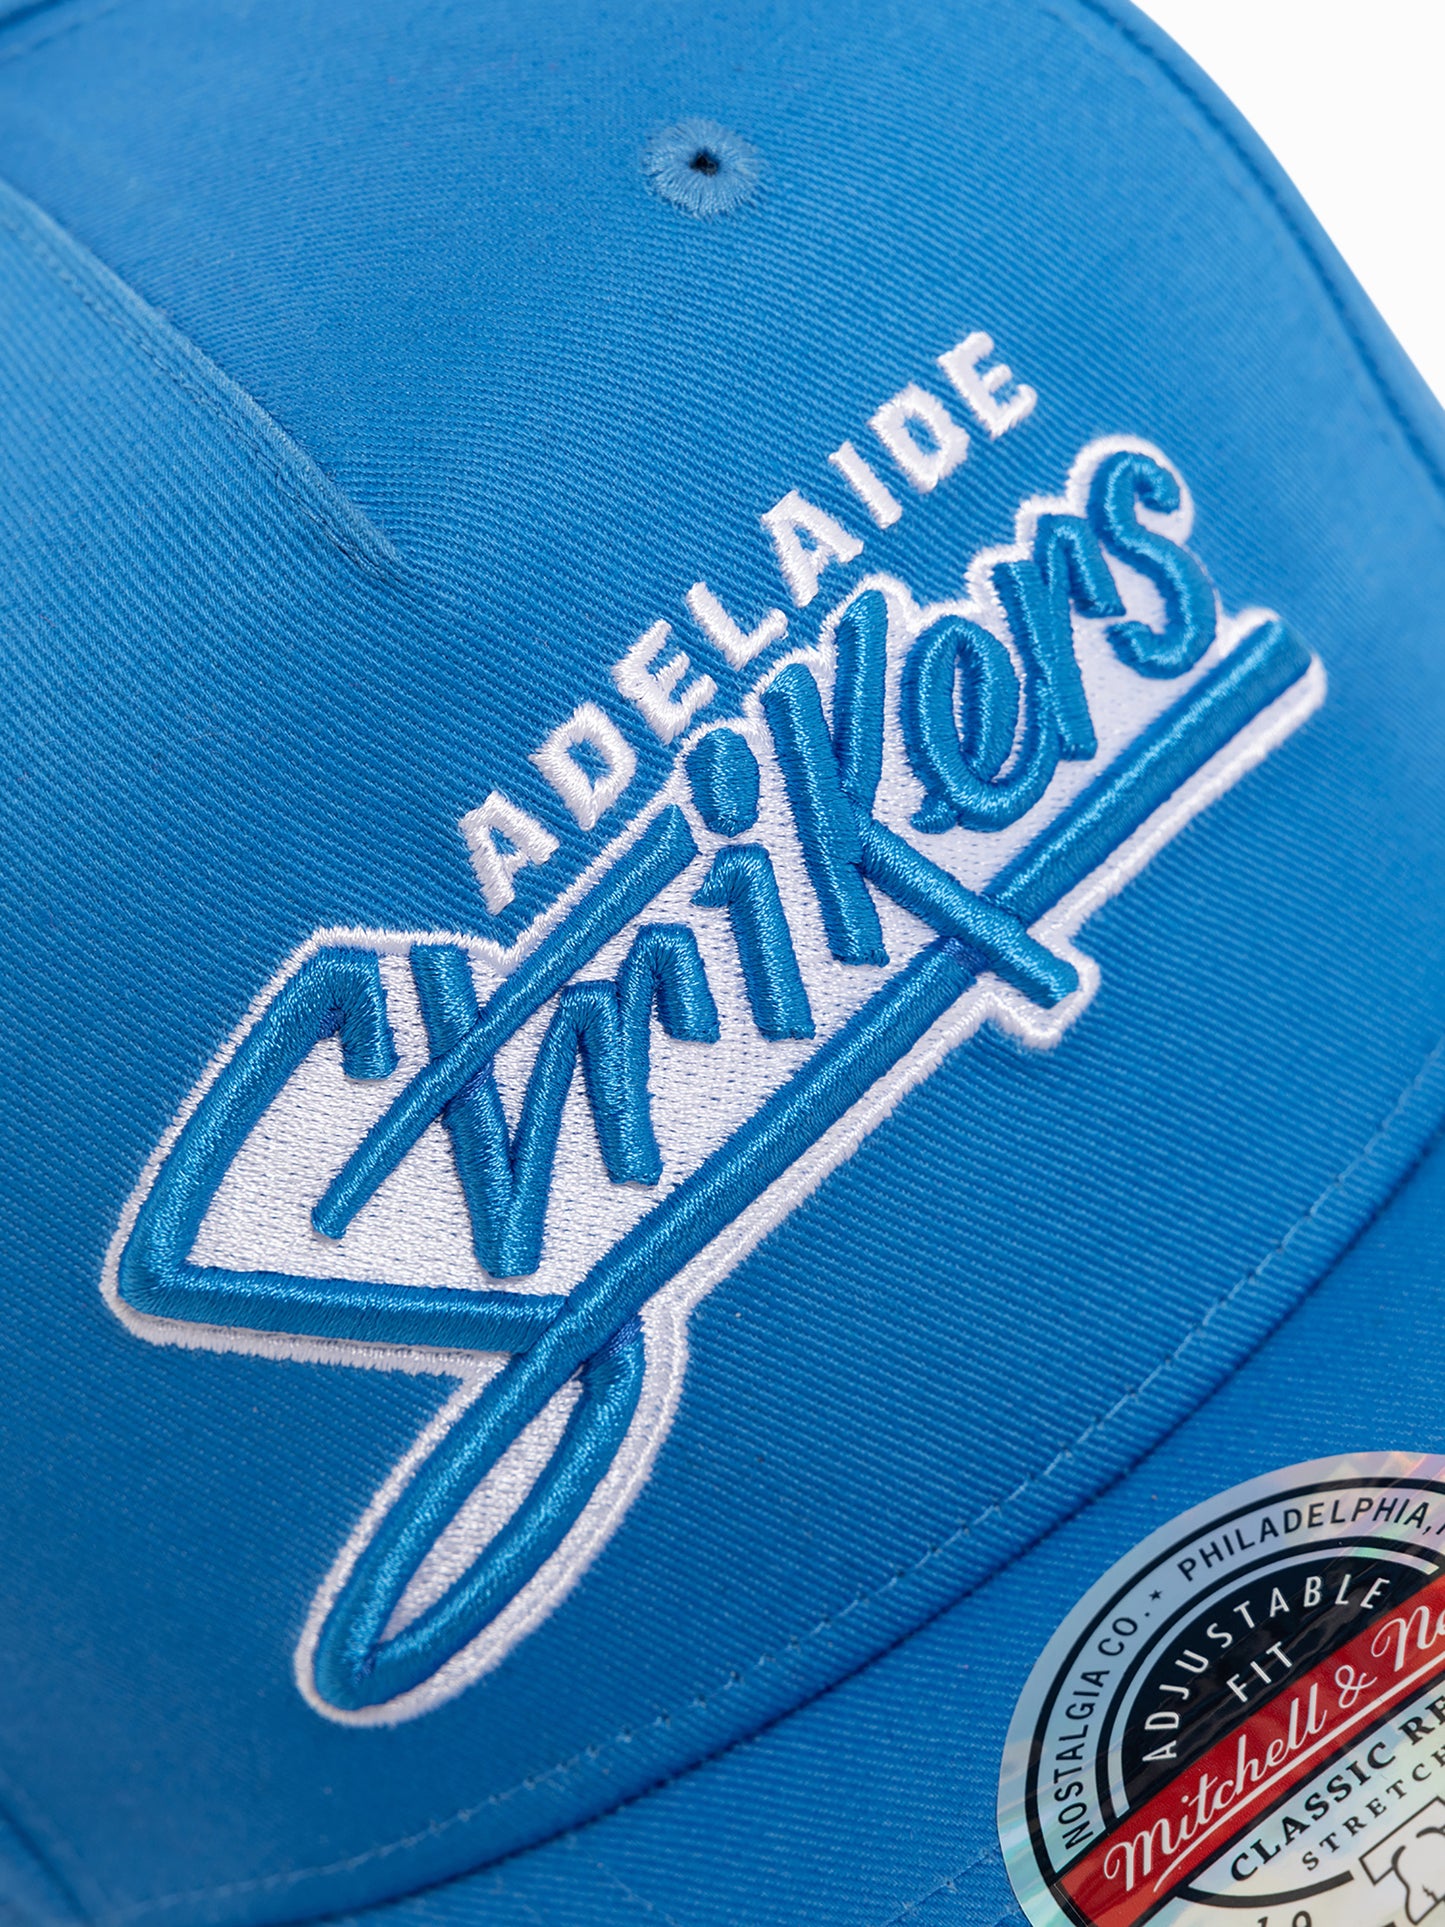 Adelaide Strikers Team Logo Pinch Panel Snapback